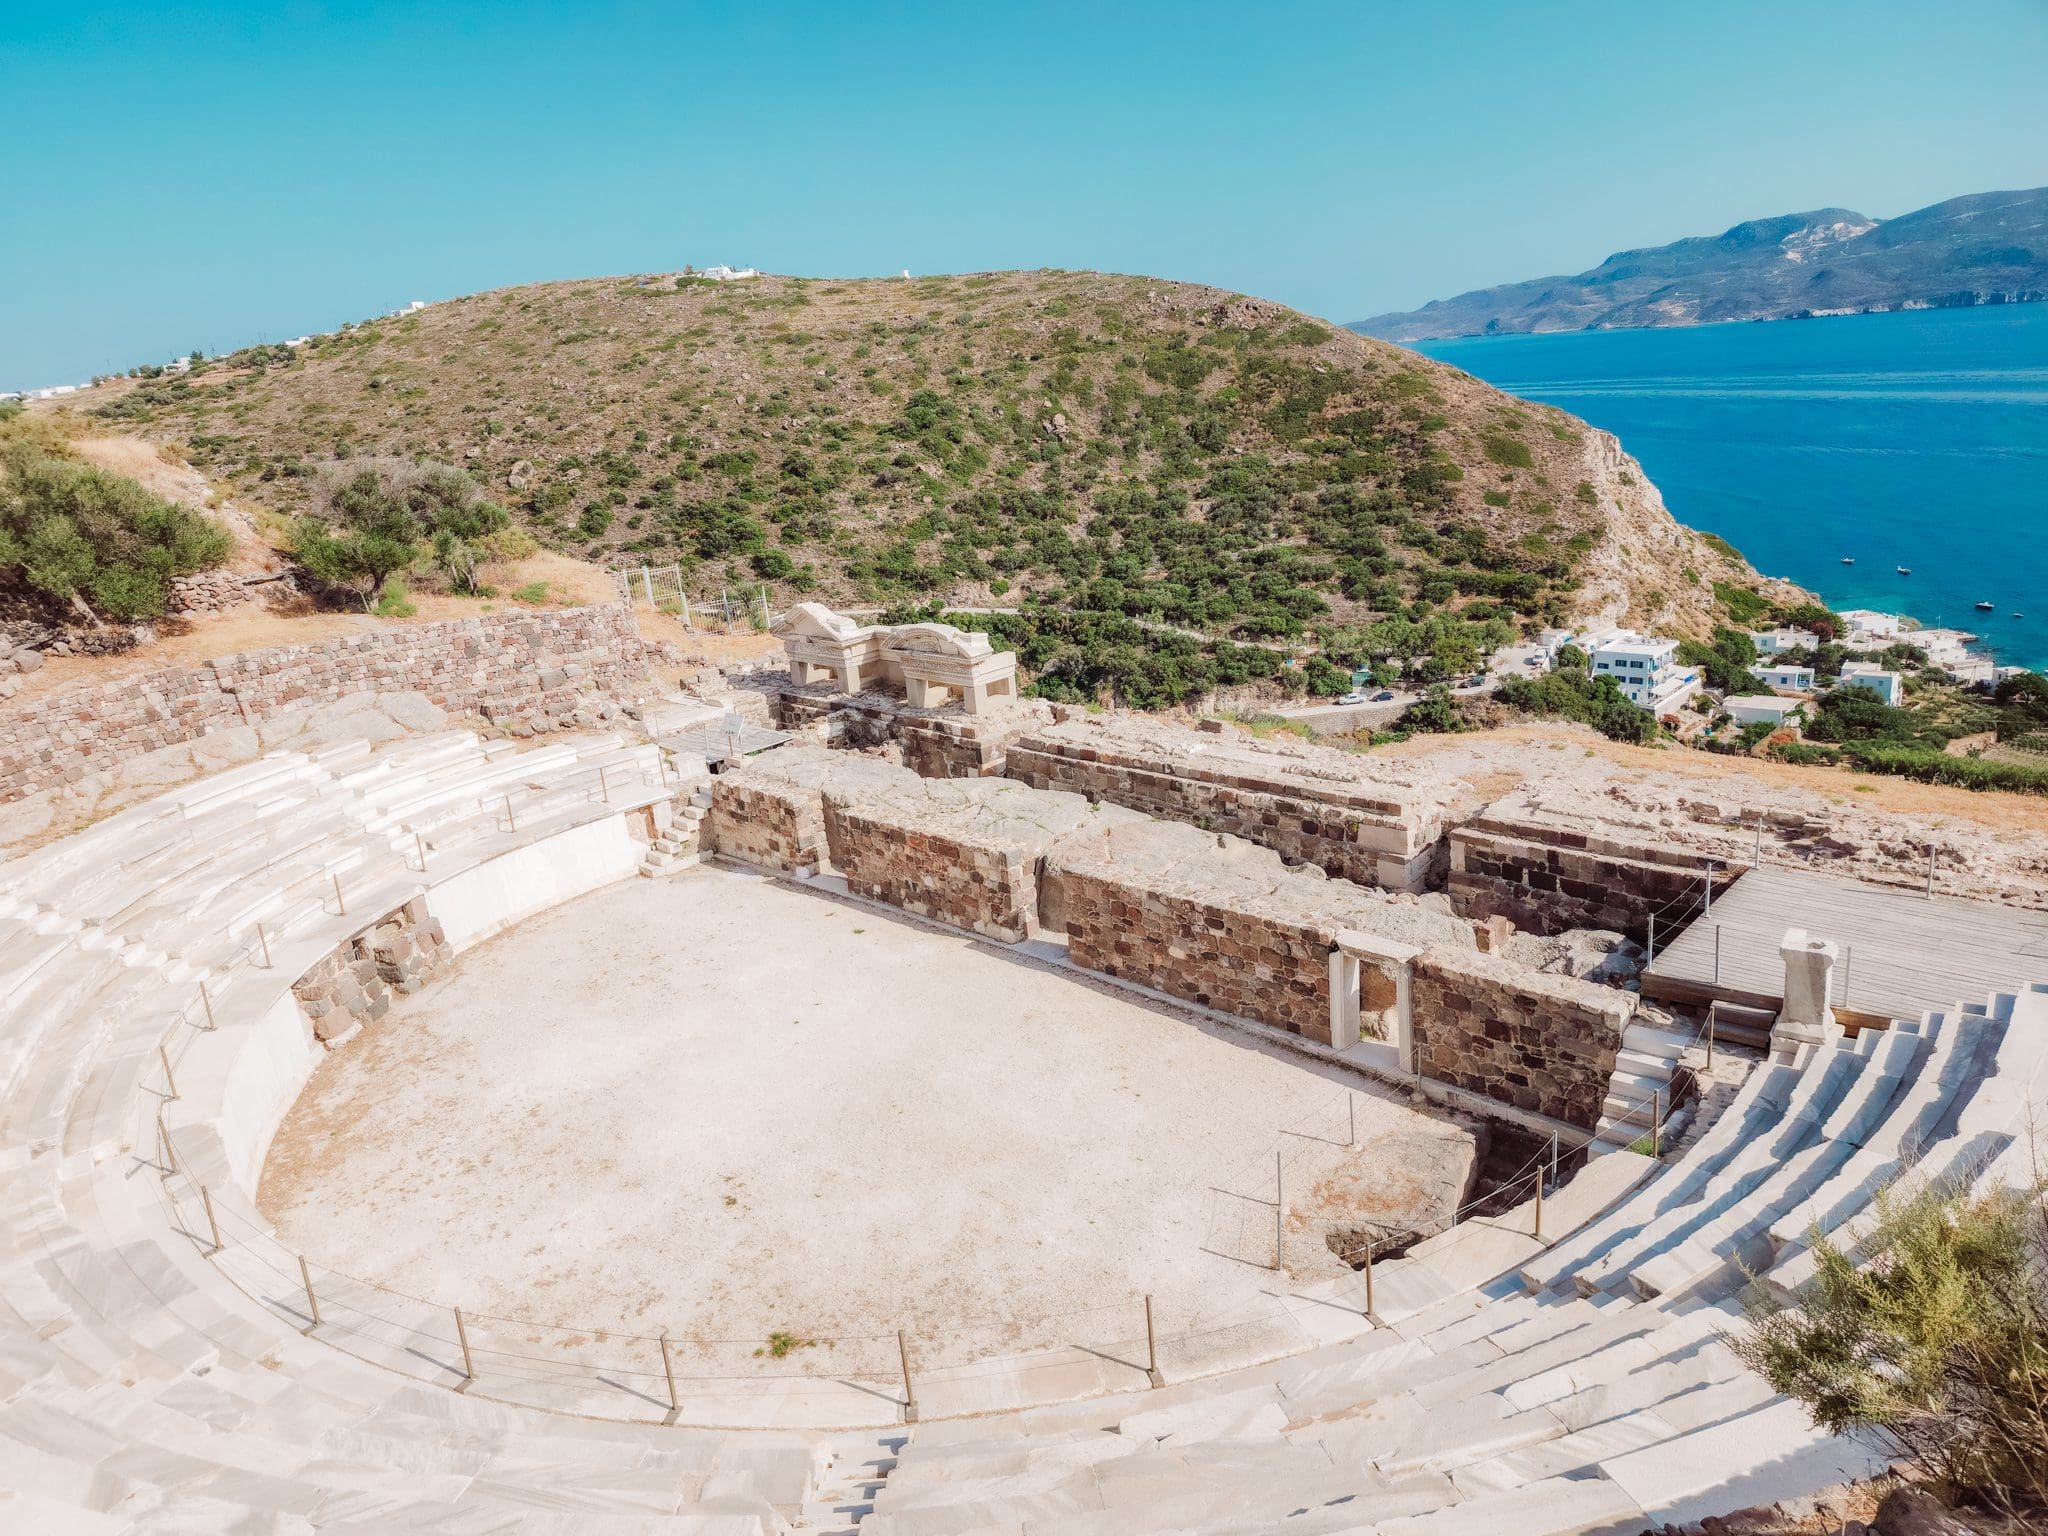 The ancient theatre at Milos